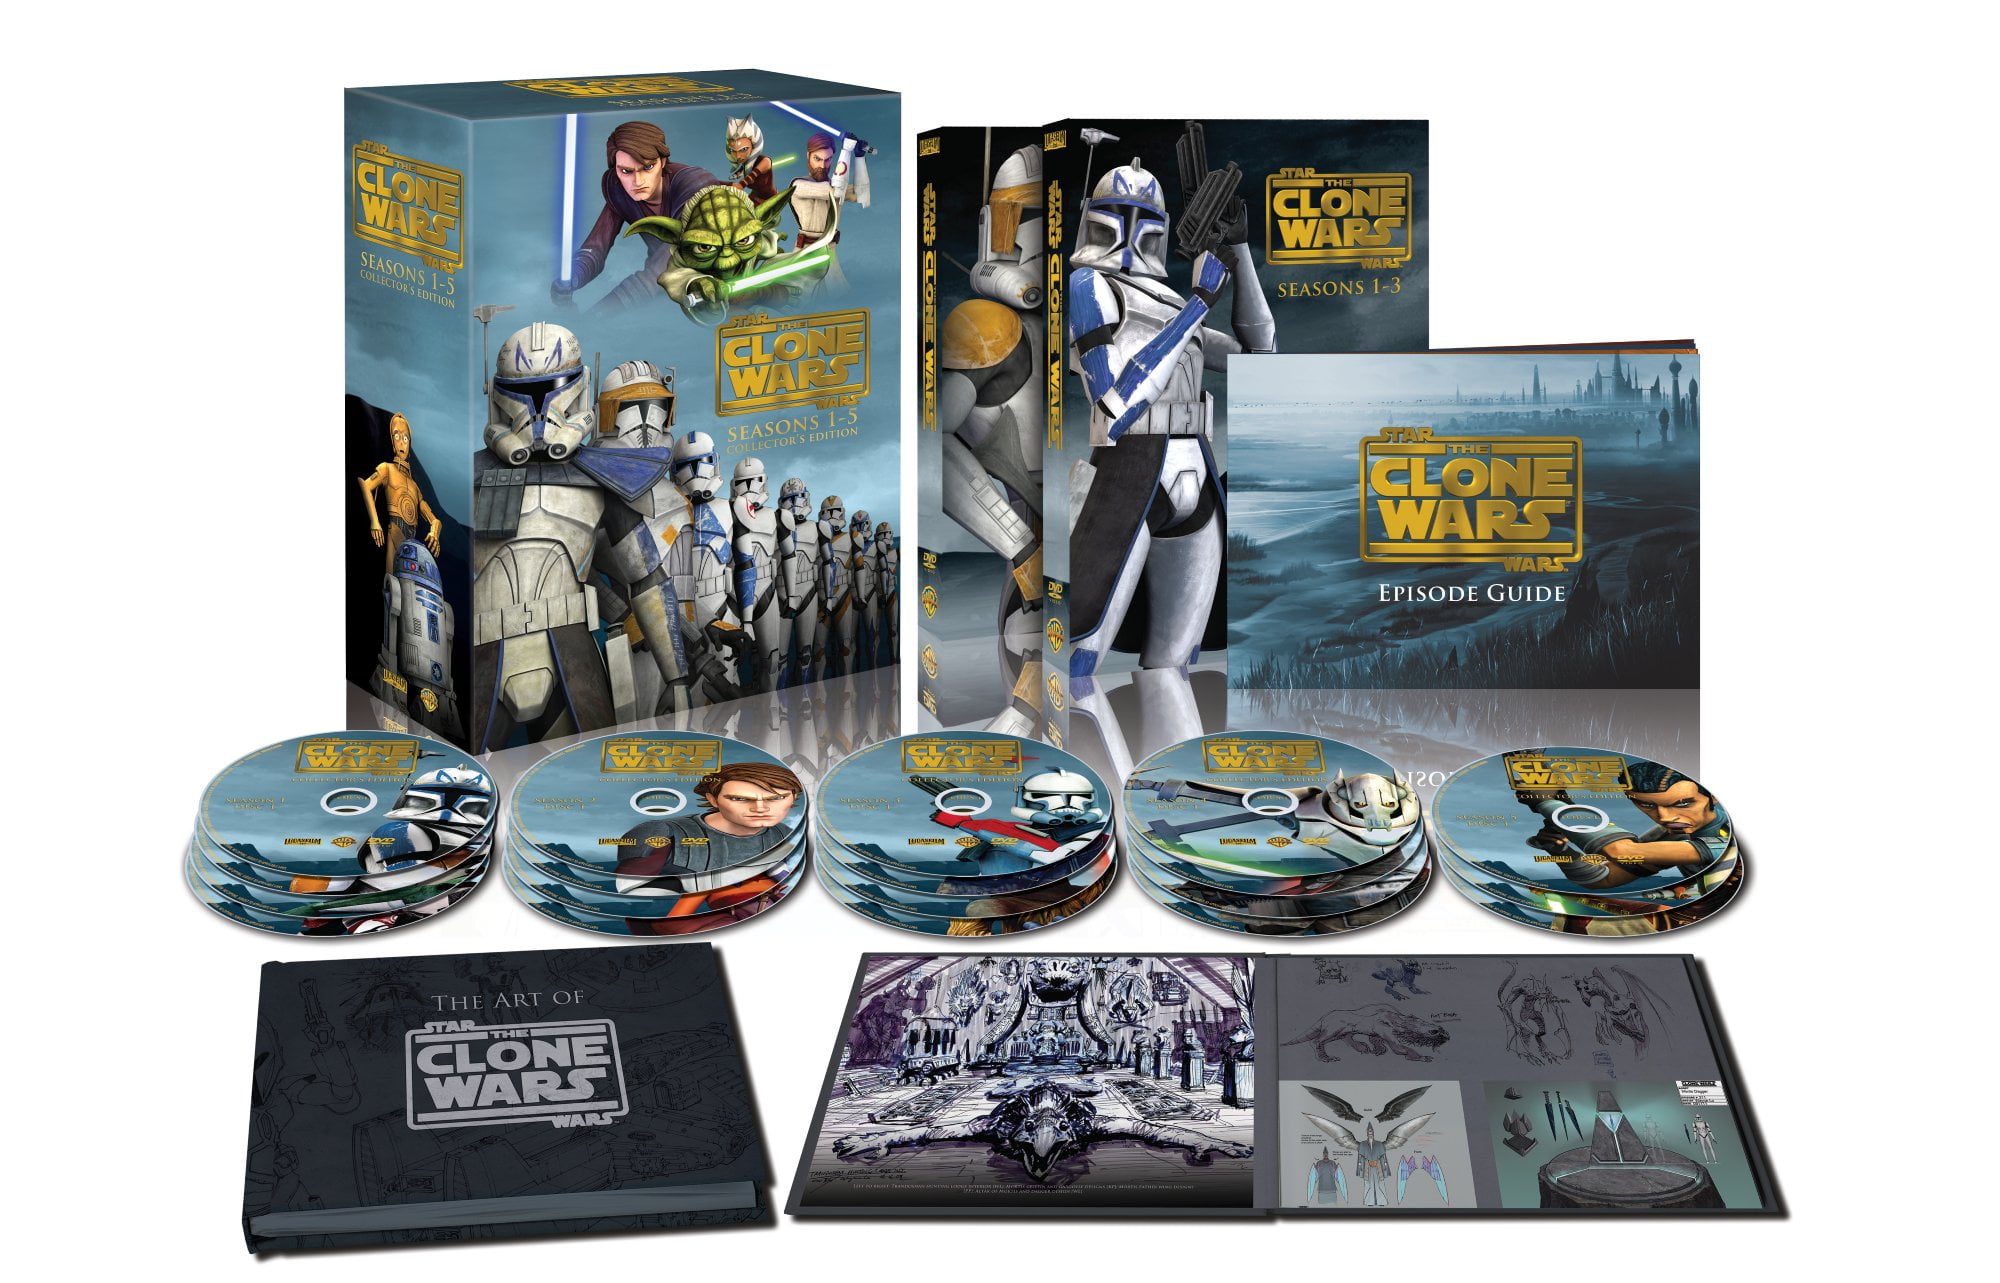 star wars the clone wars complete box set